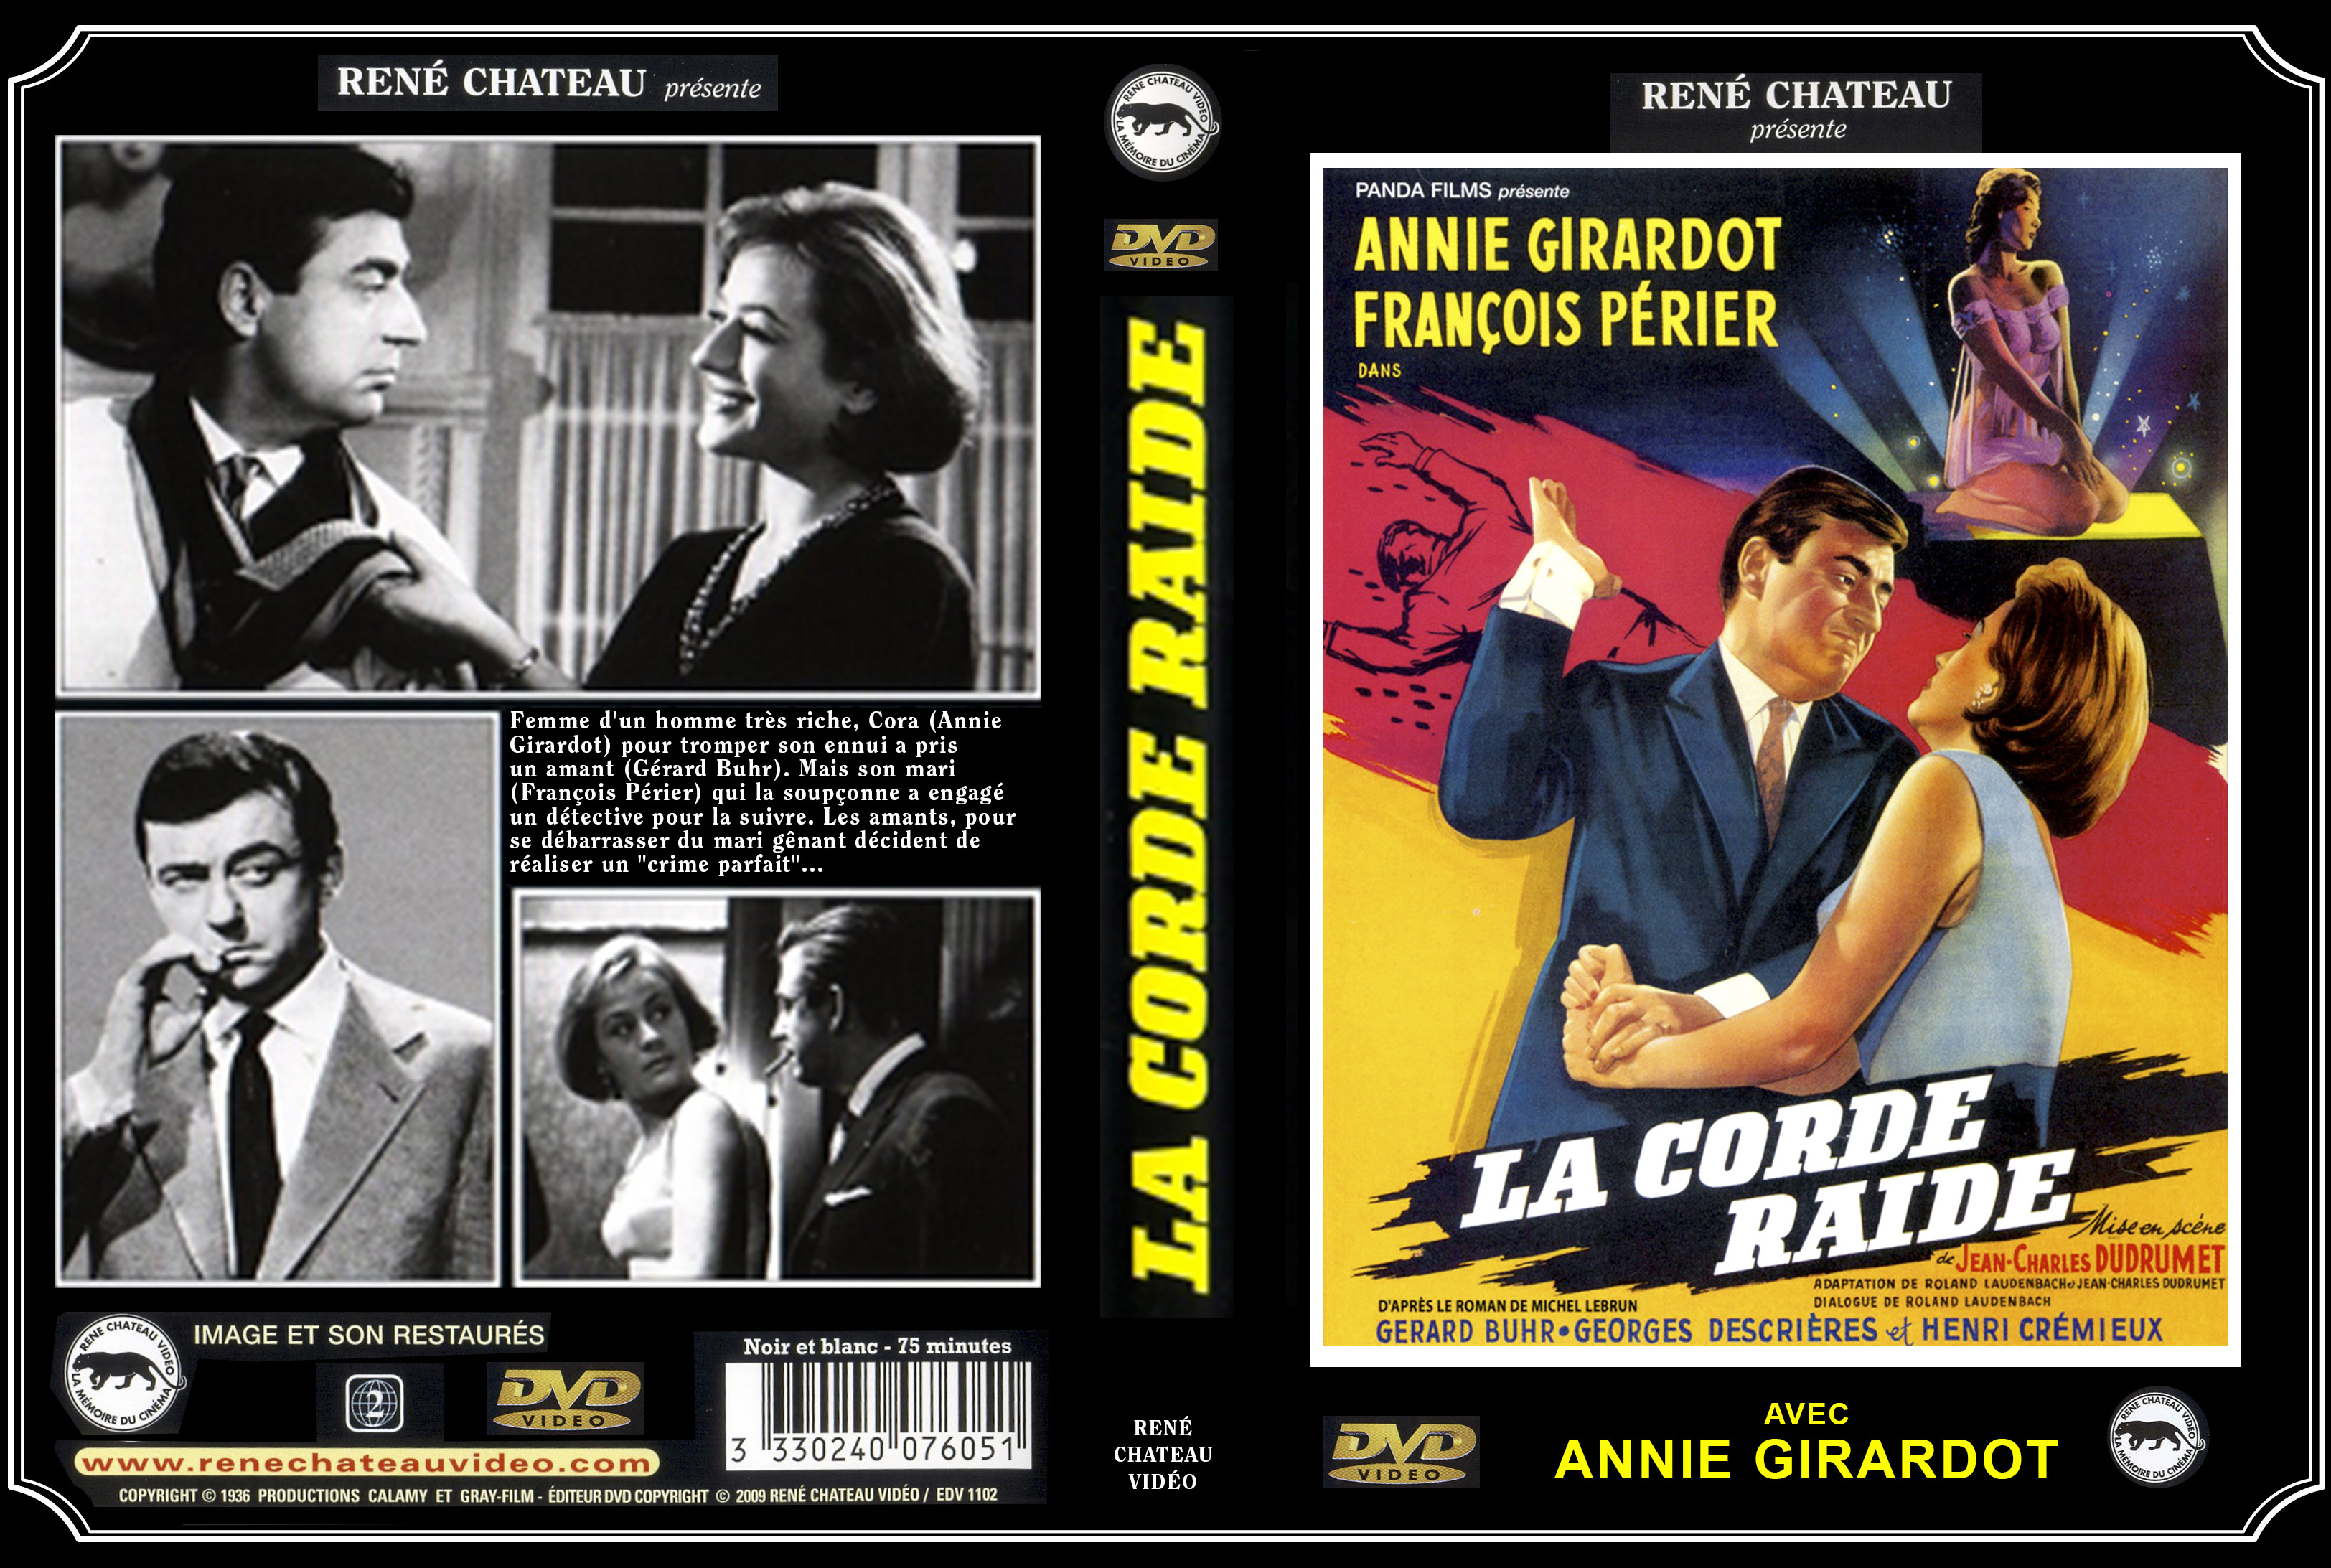 Jaquette DVD La corde raide (1960) custom